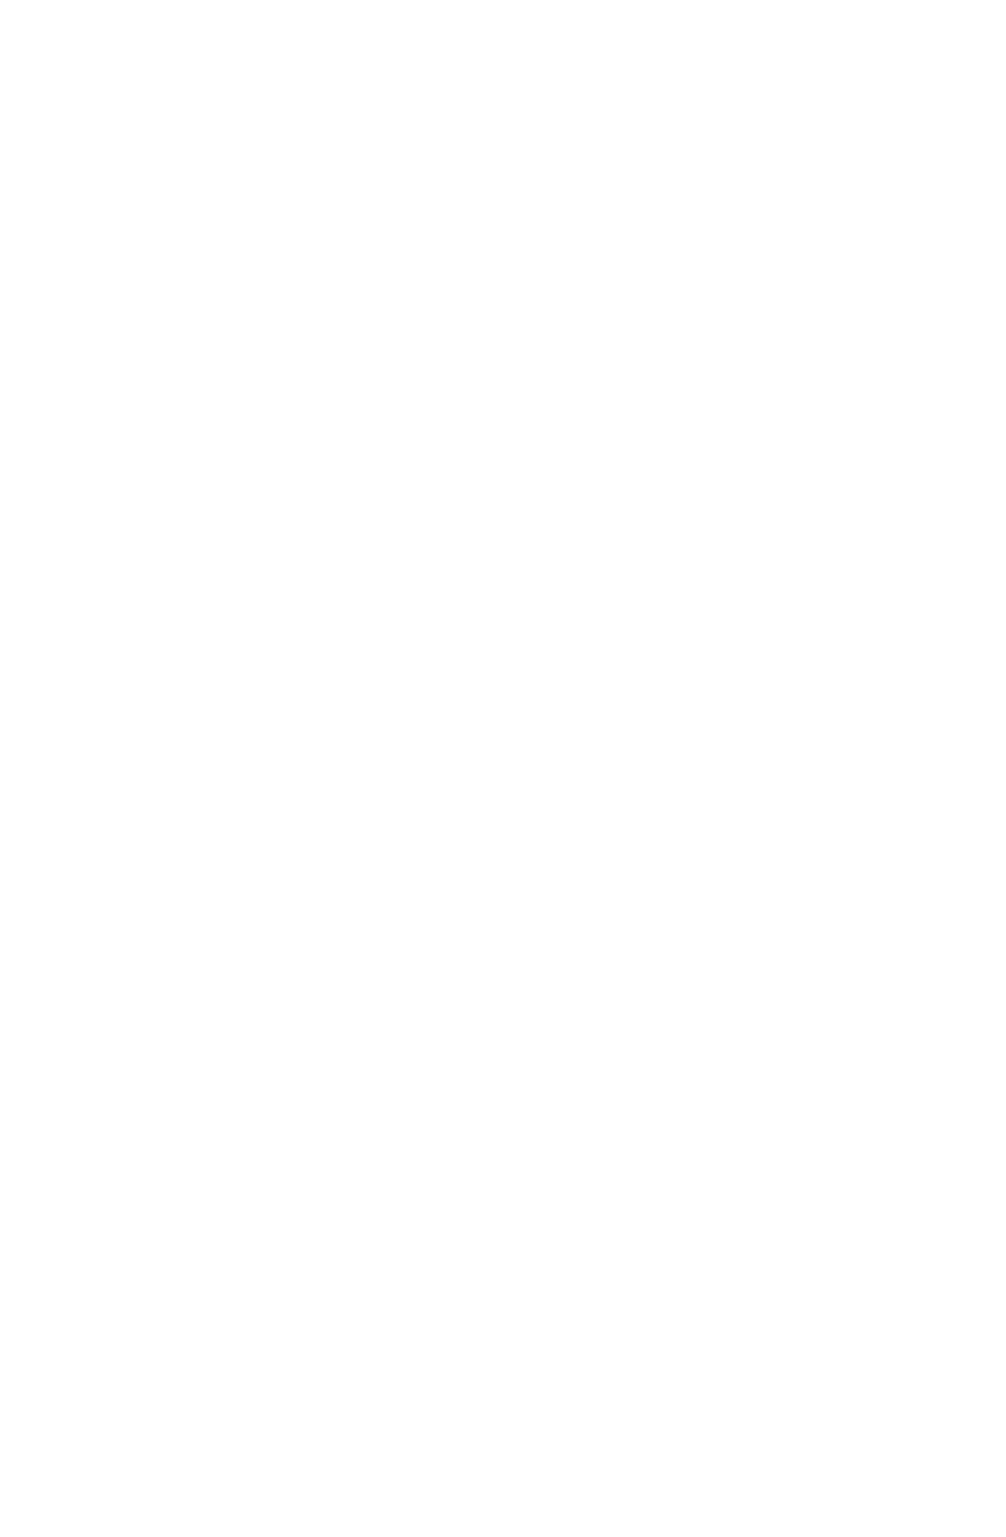 Allego logo pour fonds sombres (PNG transparent)